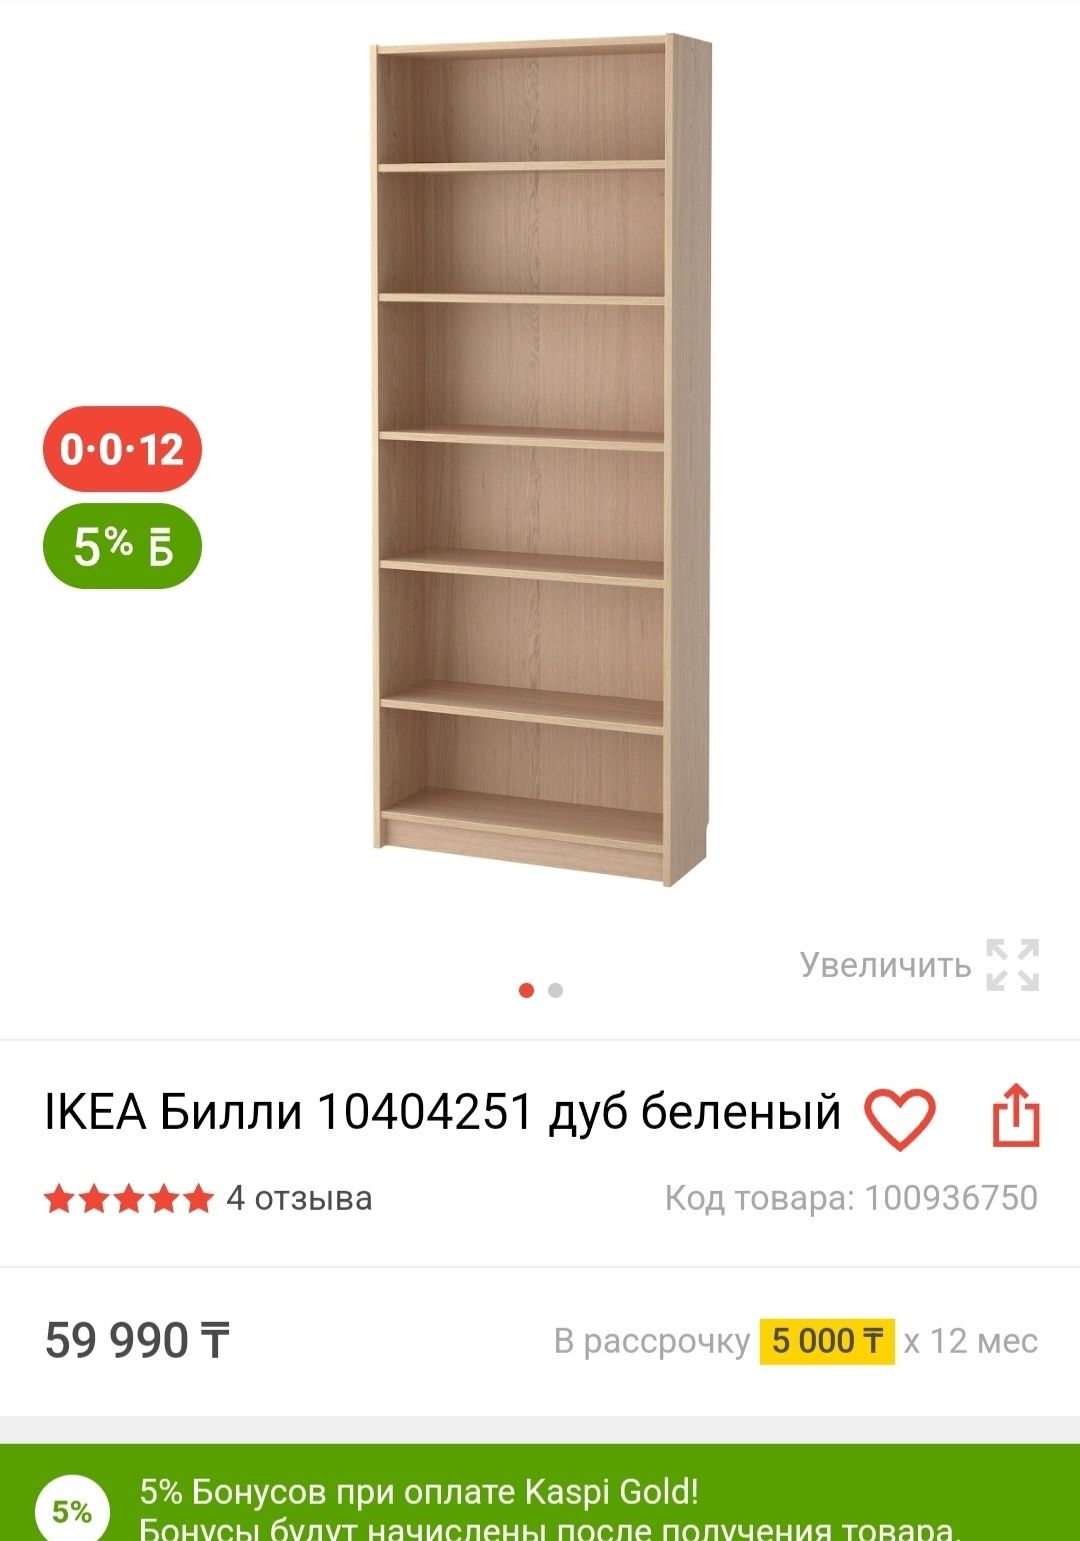 Шкаф с полкамми Ikea Билли